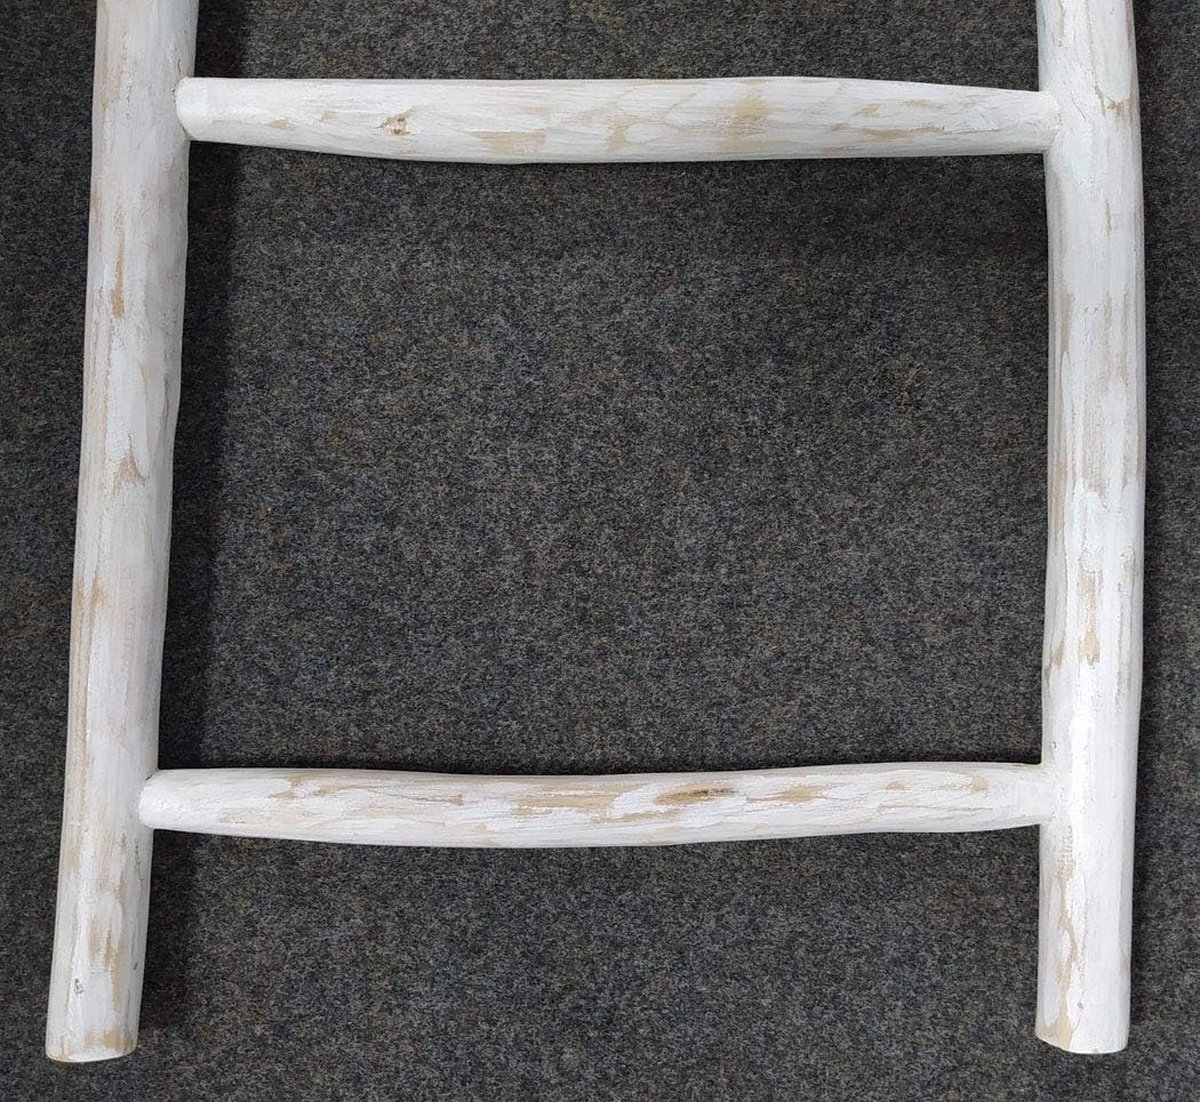 Decoratieve houten ladder wit - hoge kwaliteit - handdoekhouder van teakhout - decoratieve ladder kledingrek - 150cm - teak - kleur: wit gewassen - handdoekladder voor badkamer, slaapkamer en garderobe.